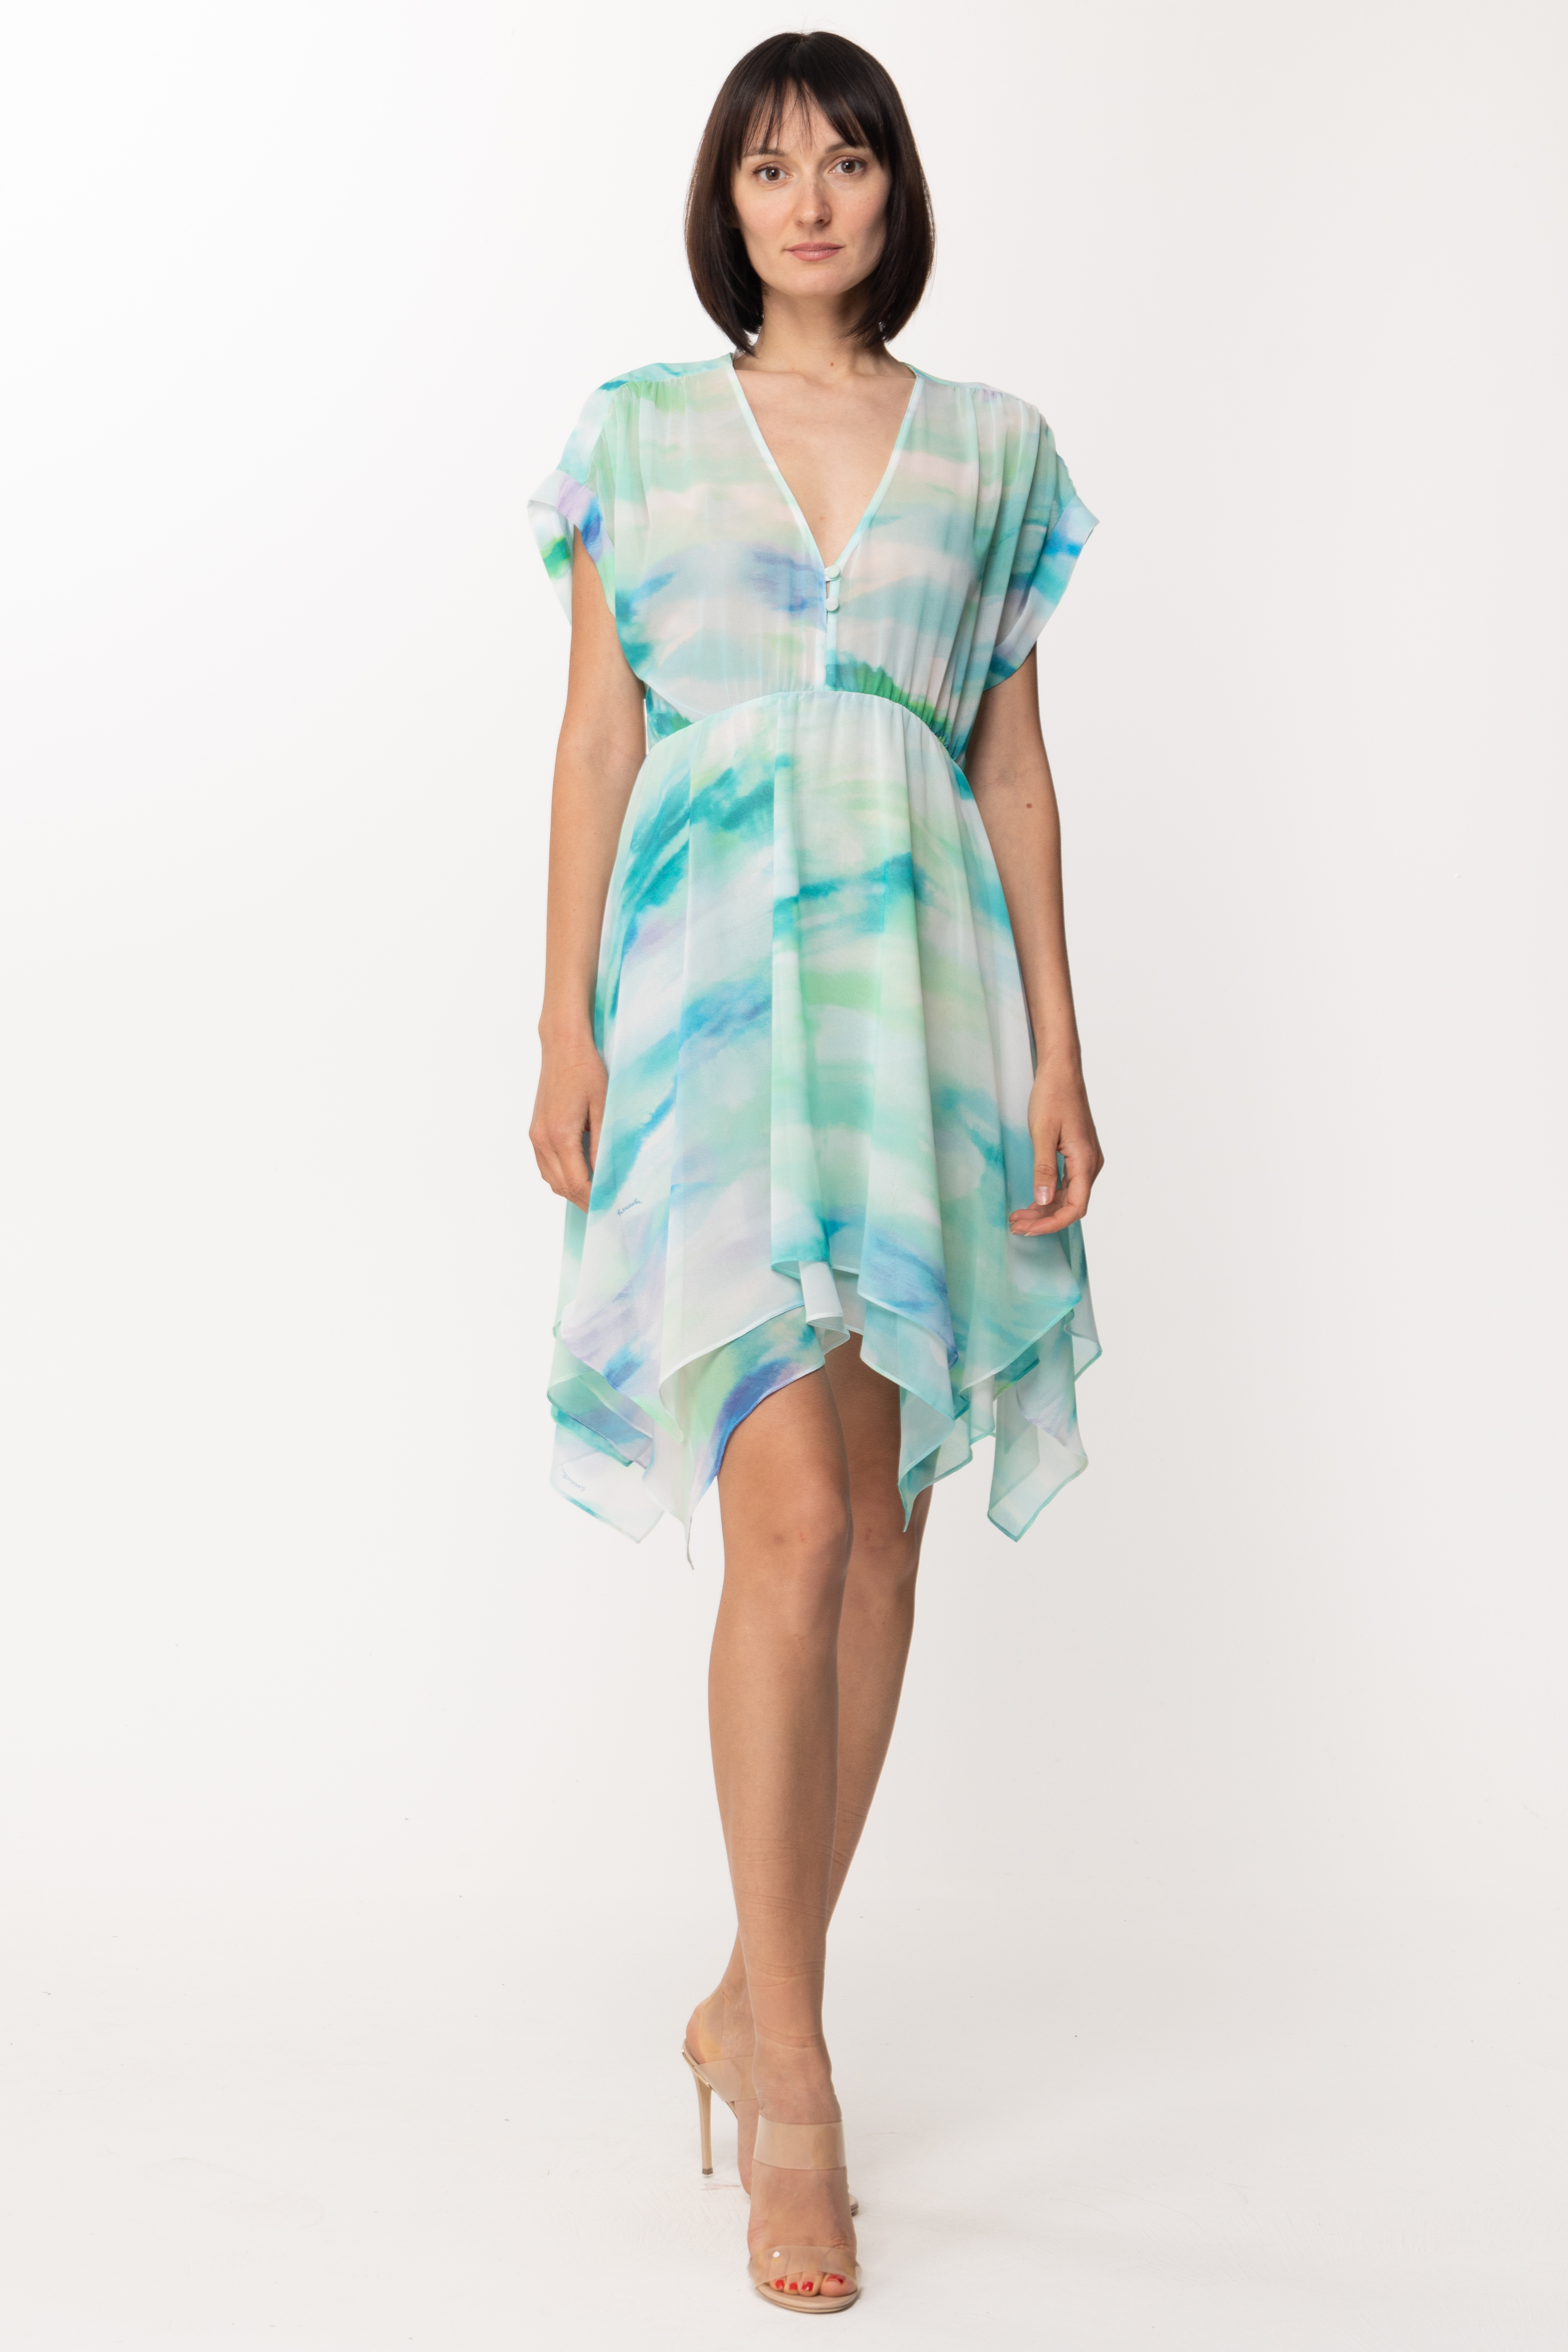 Vorschau: Patrizia Pepe Asymmetrisches Kleid mit Aquarelldruck Aquatic Camu